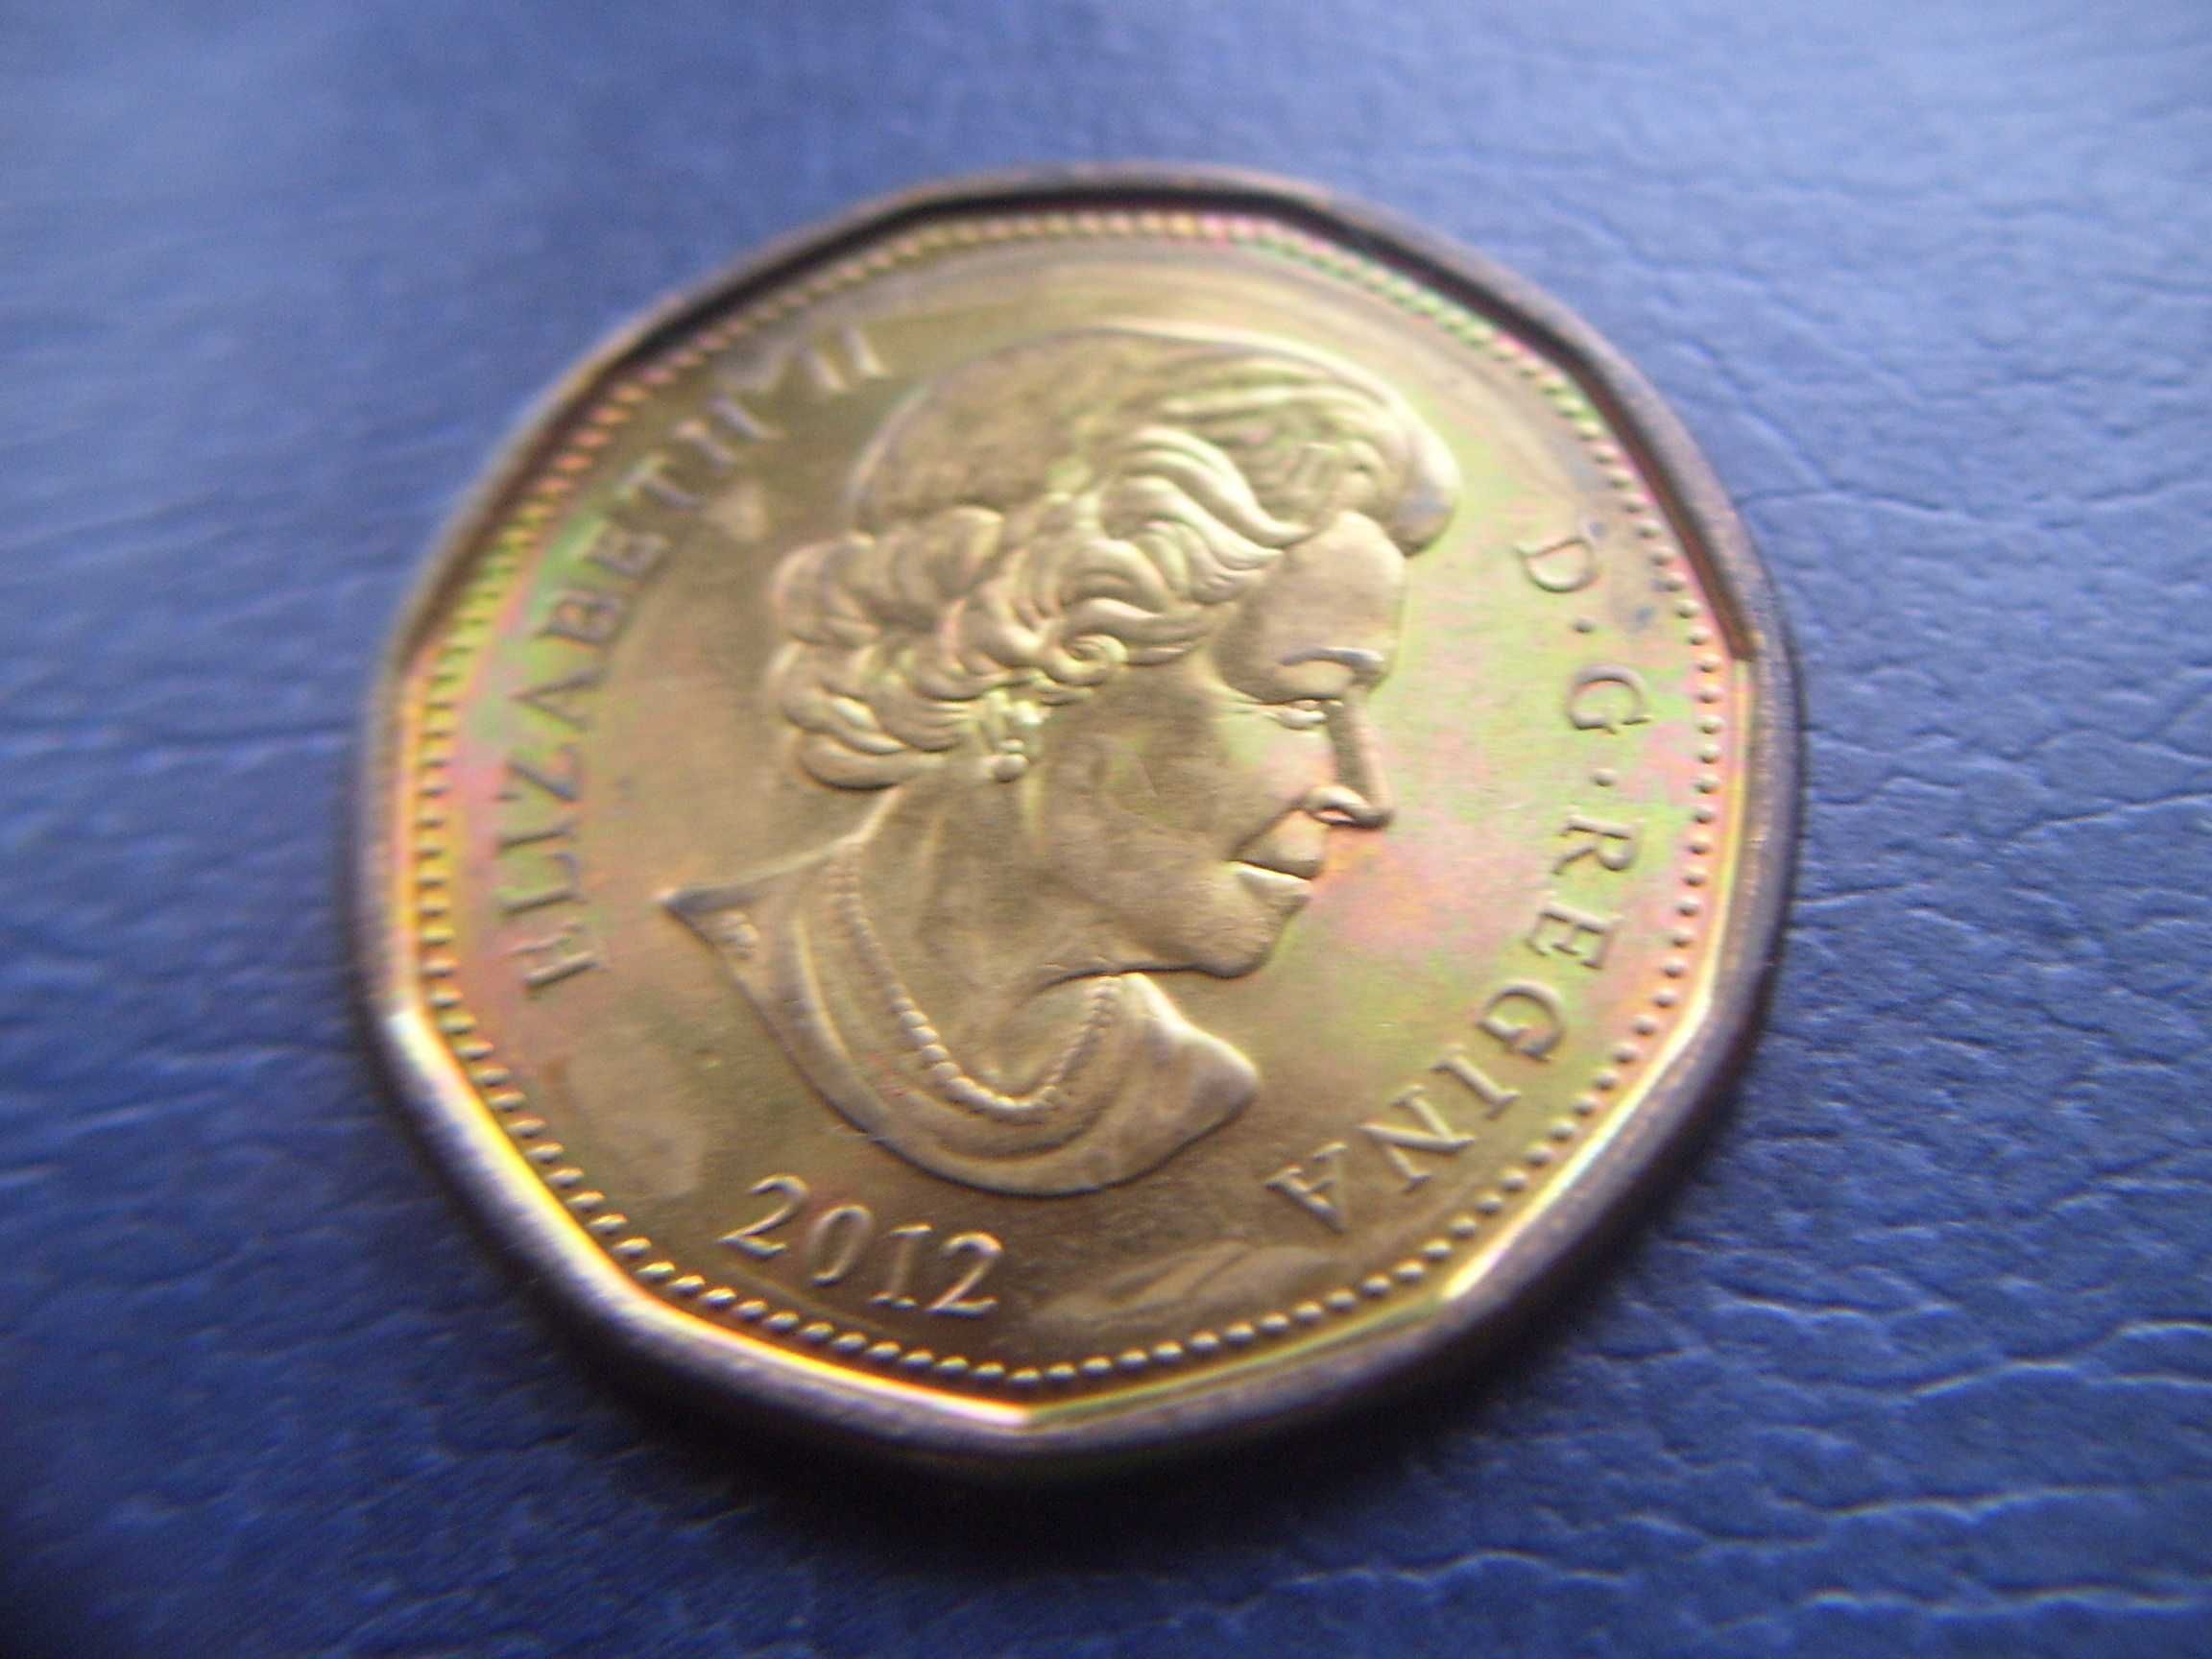 Stare monety 1 dolar 2012 Kanada stan menniczy